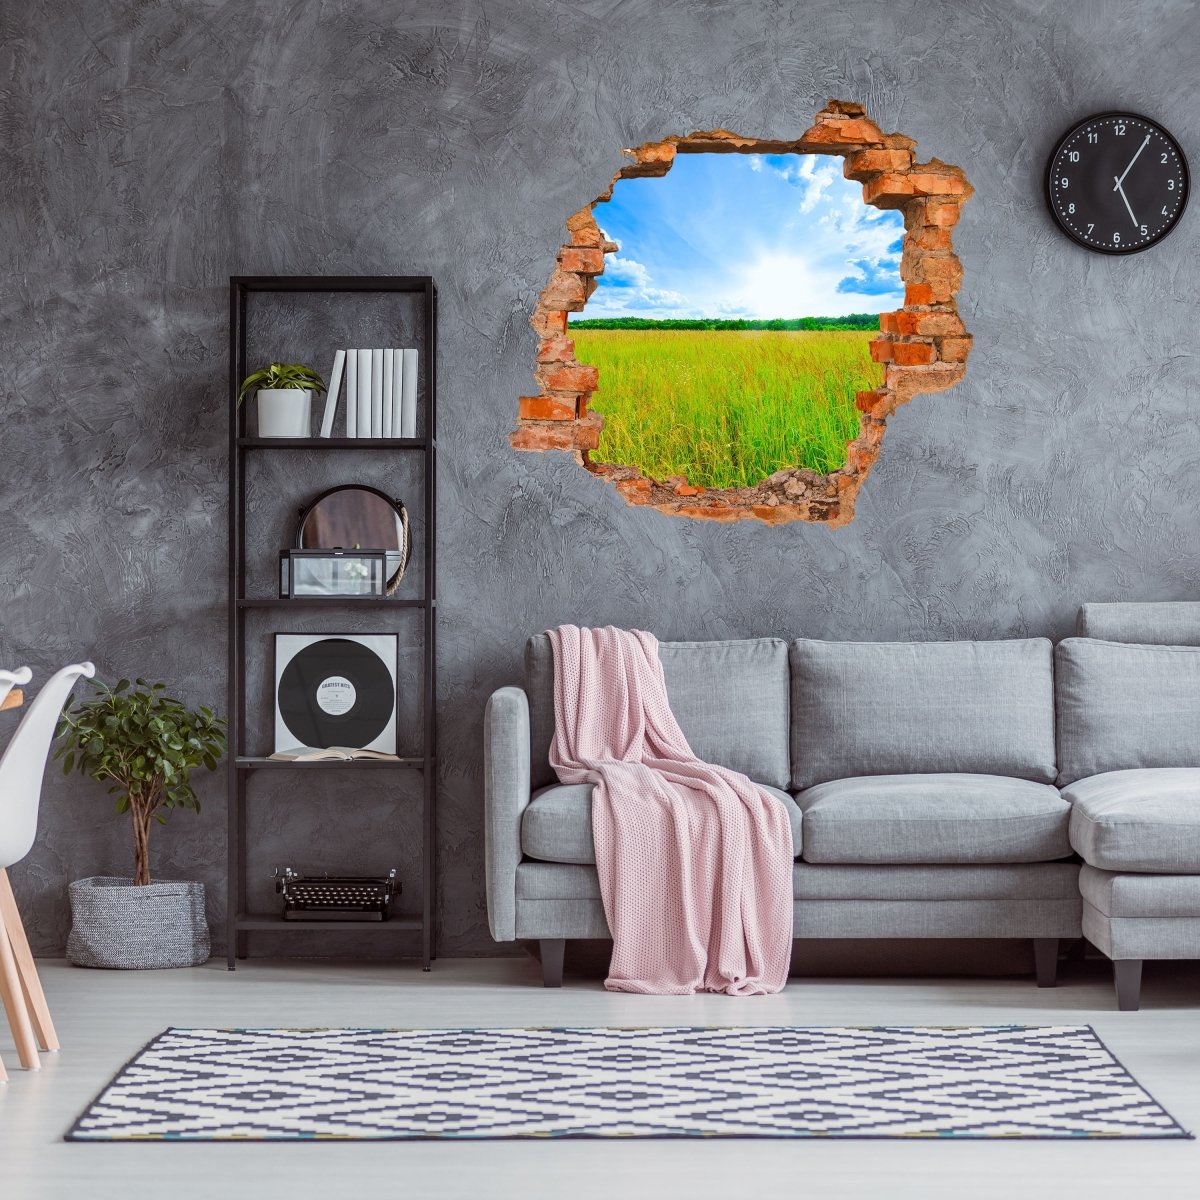 Sticker mural 3D champ en été, soleil, ciel, forêt - Sticker mural M1157